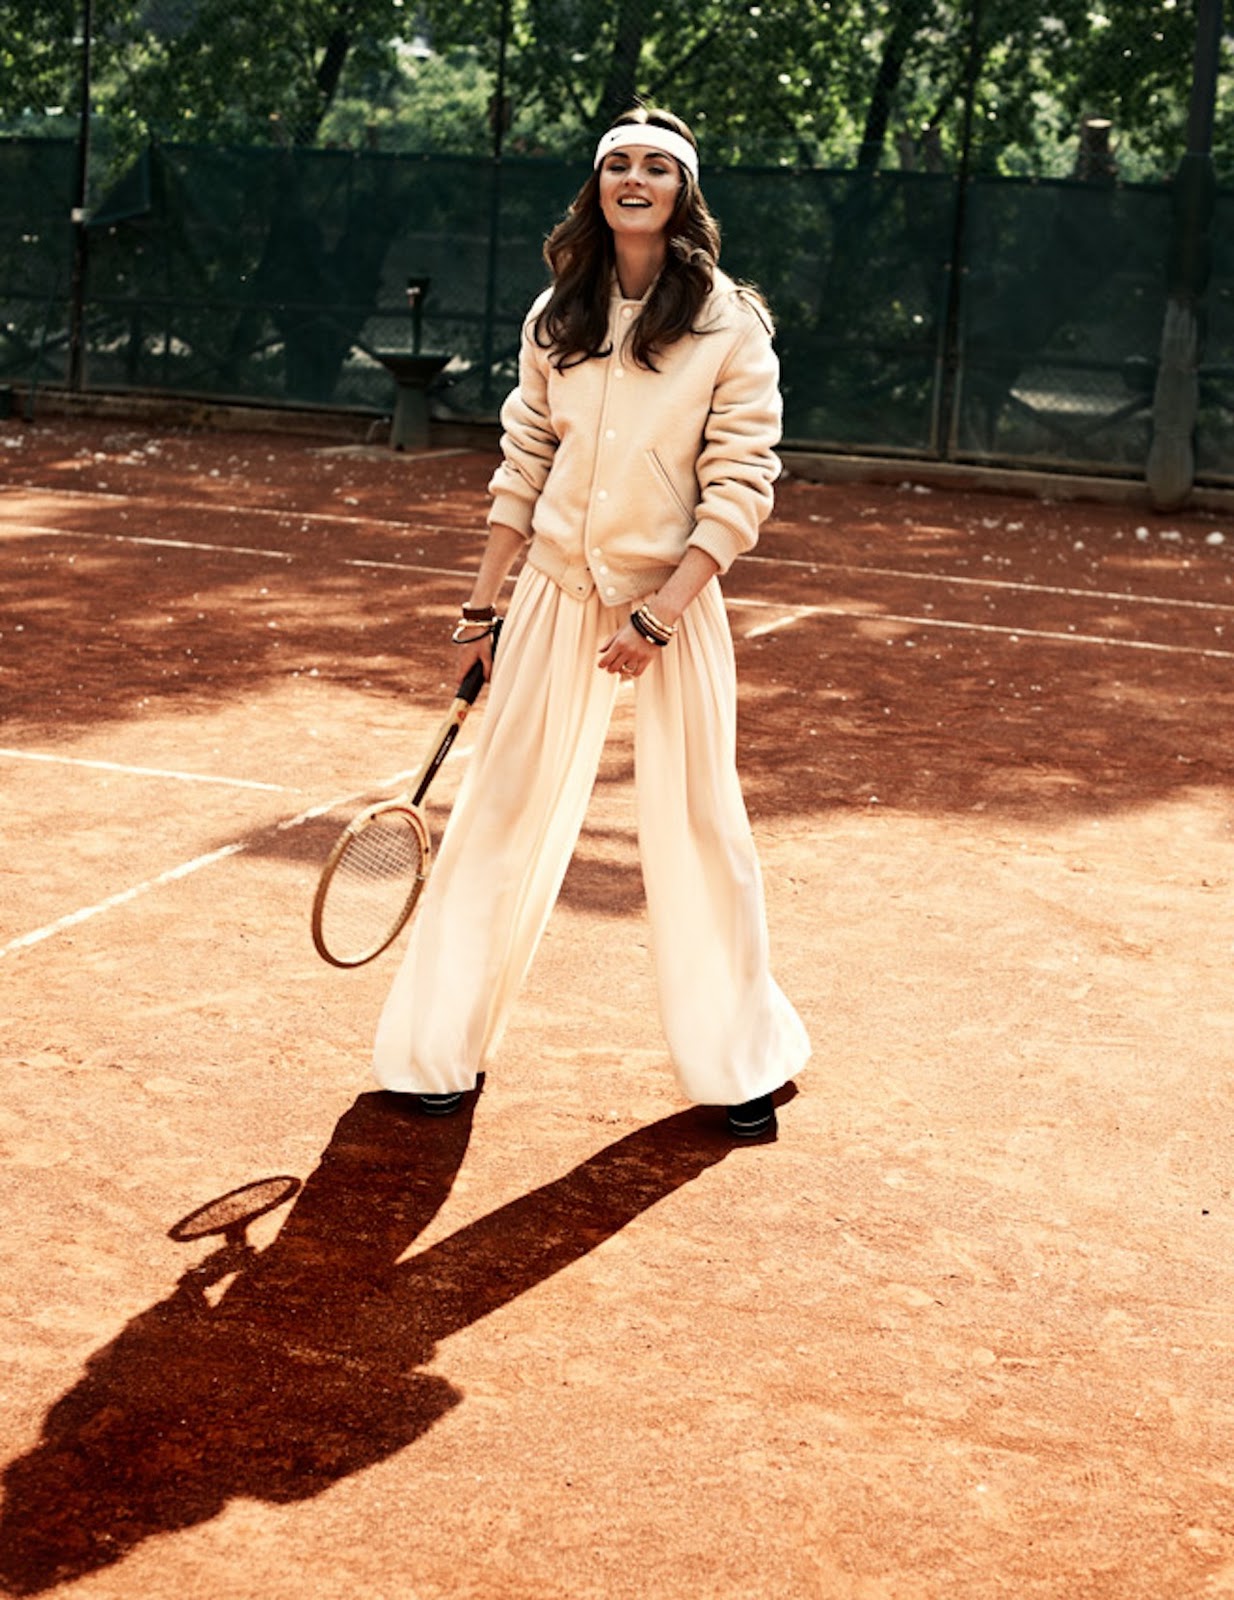 Tennis Fashion Editorial